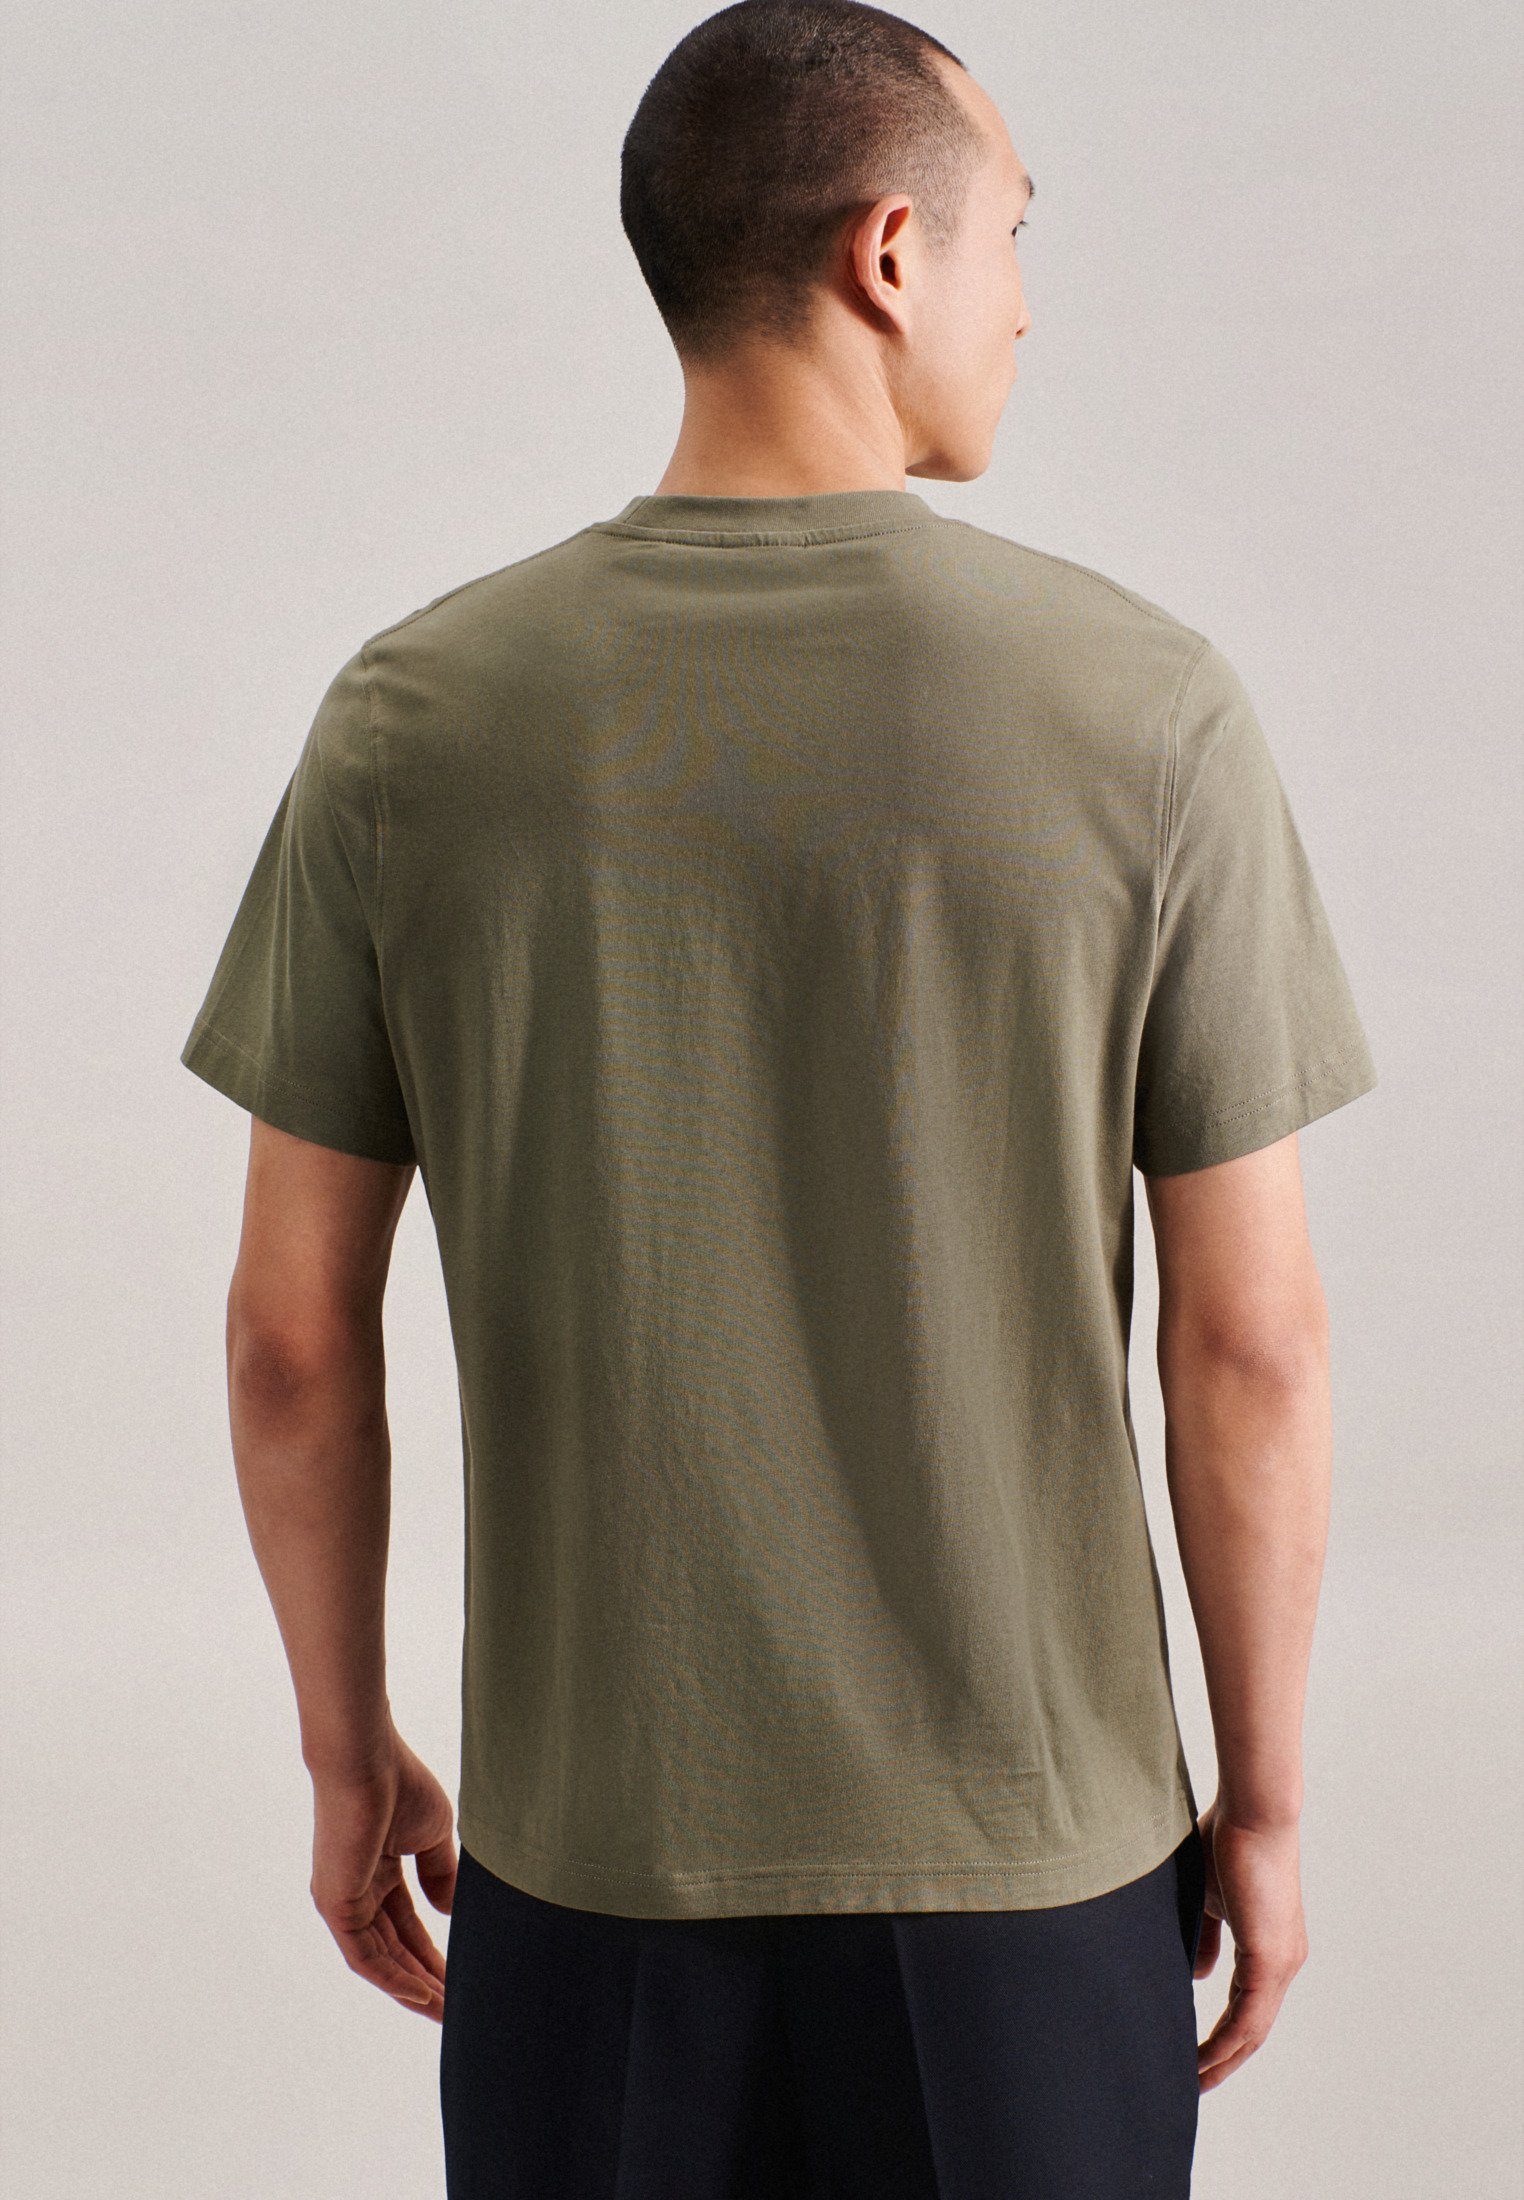 Kurzarm Grün T-Shirt Uni Rundhals Regular seidensticker